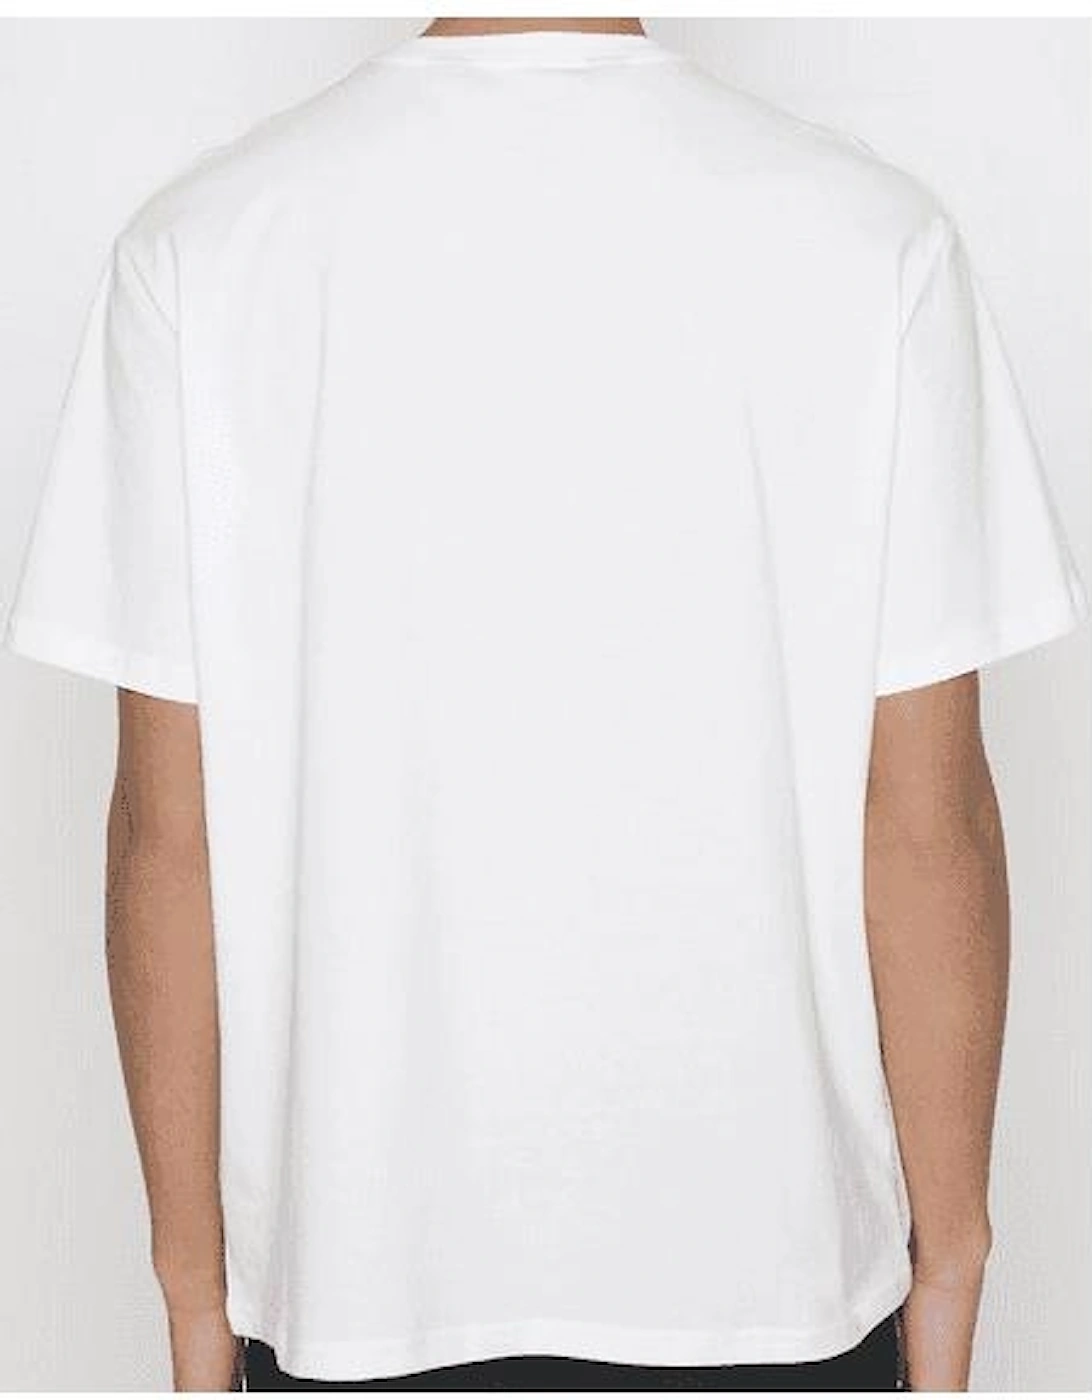 Cotton Eden Print White T-Shirt